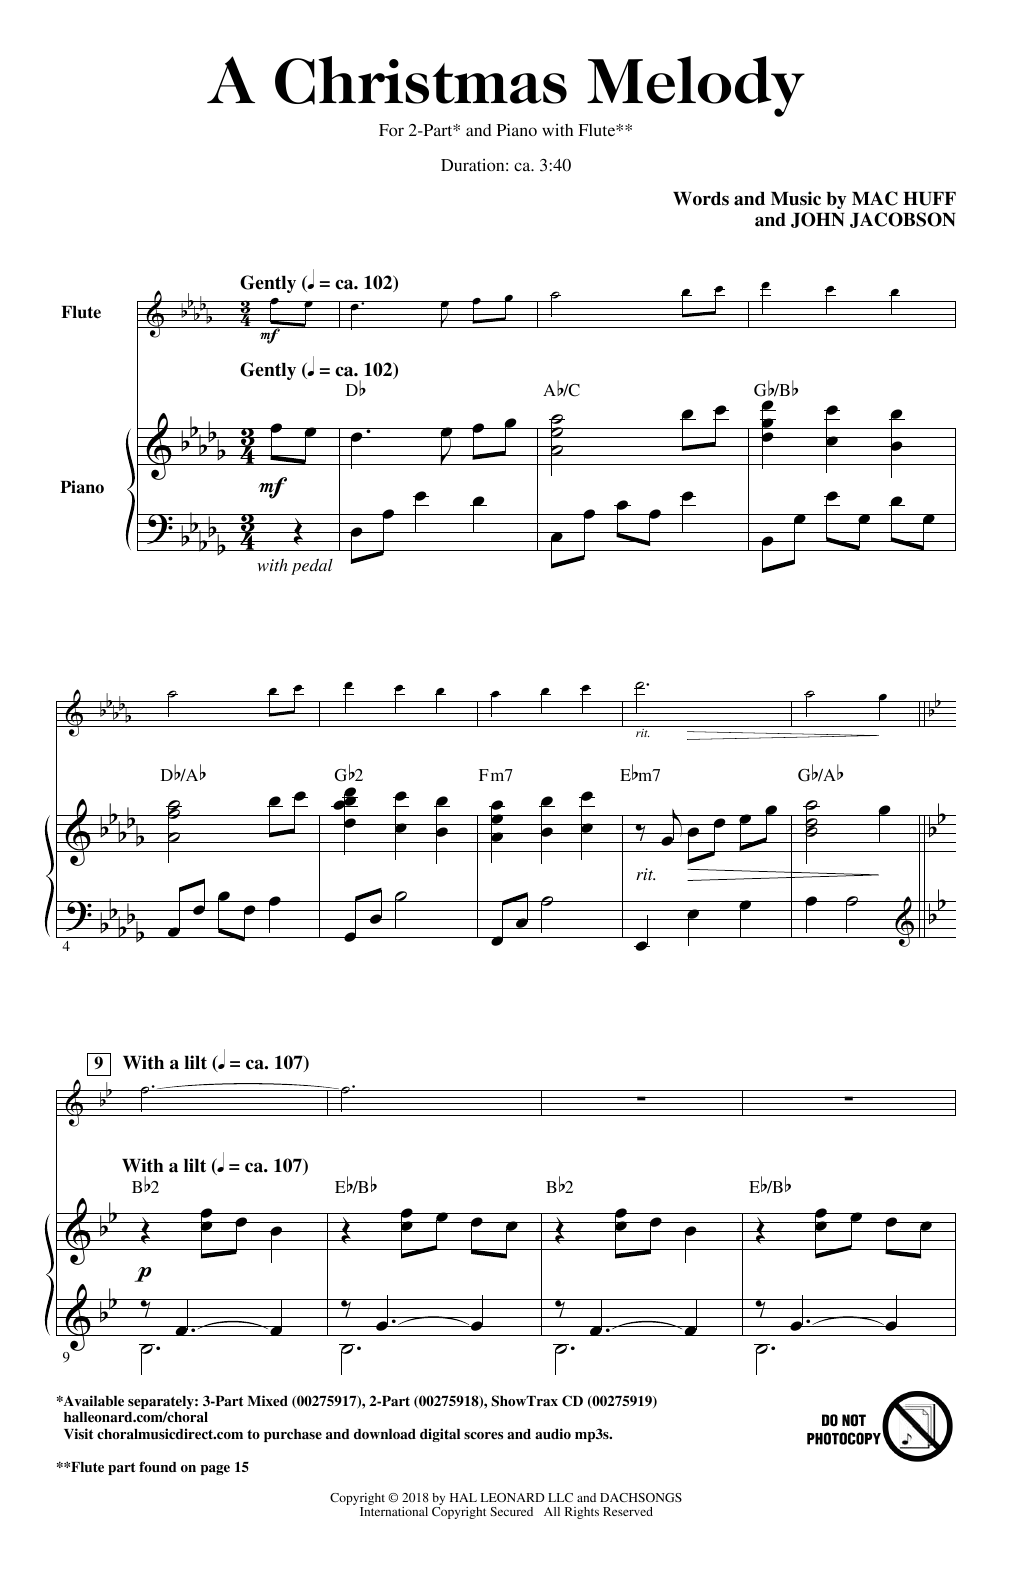 John Jacobson, Mac Huff A Christmas Melody Sheet Music Notes & Chords for 2-Part Choir - Download or Print PDF